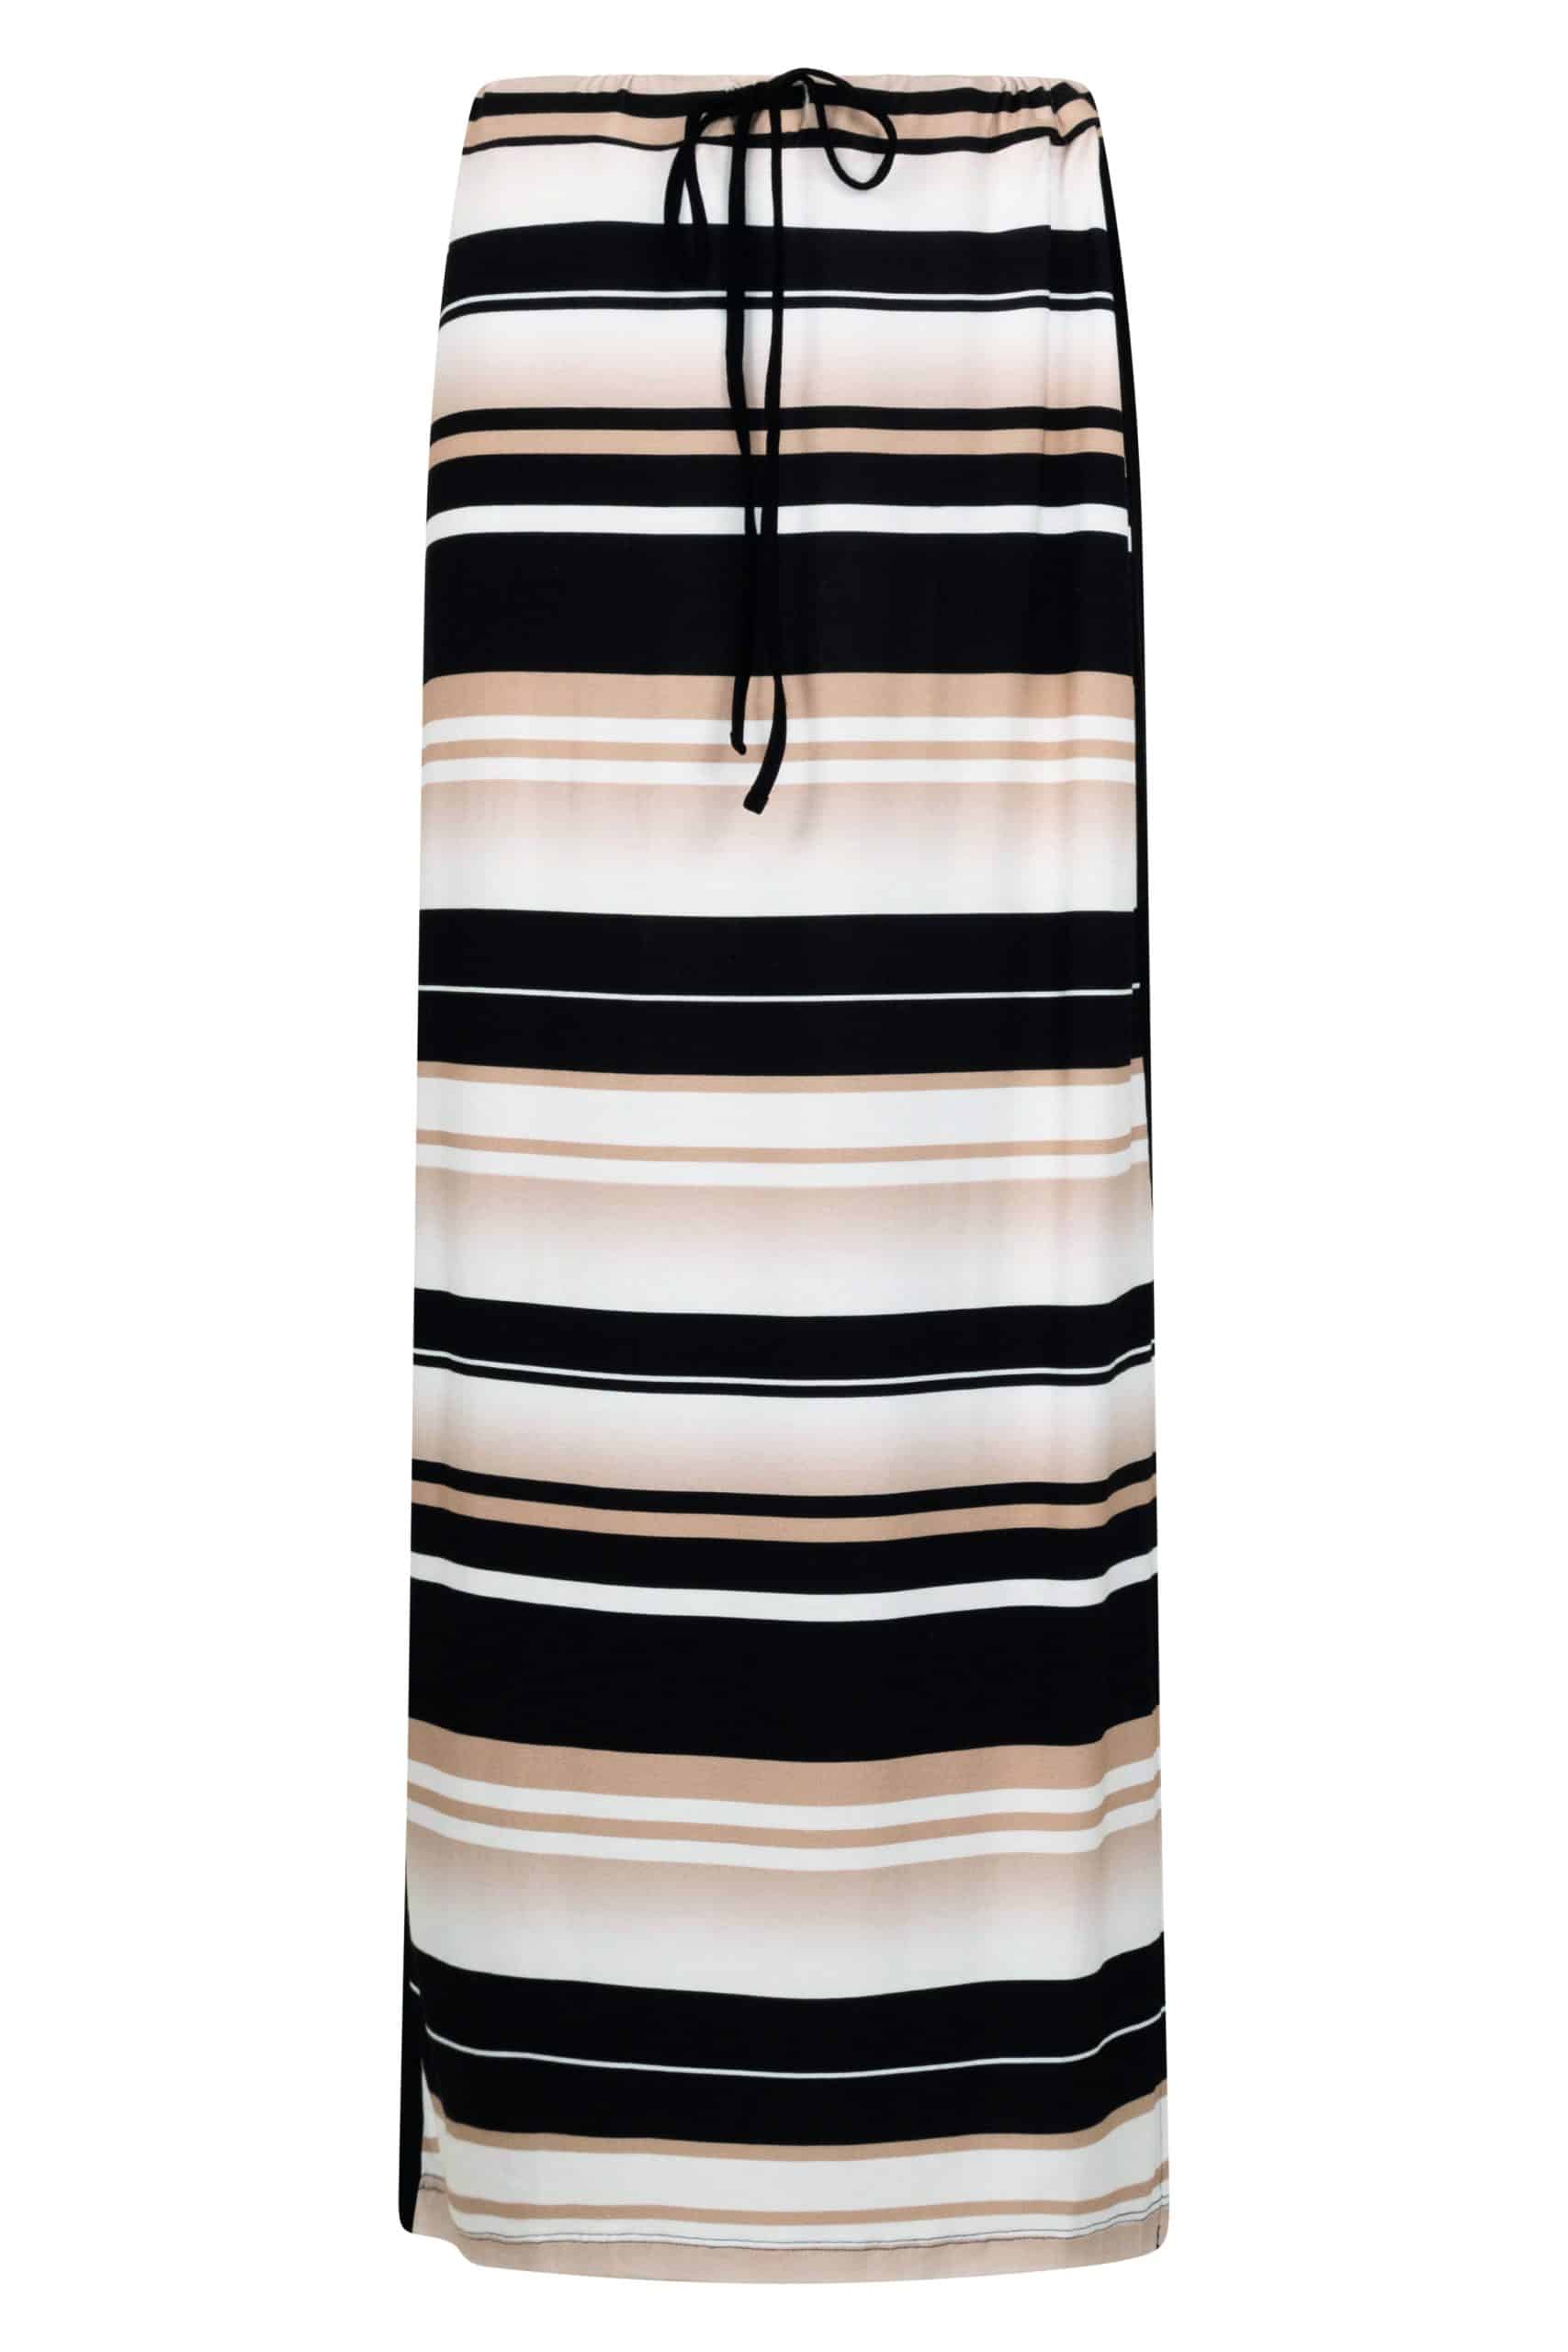 Zoso 223 Kelly Striped Long Skirt